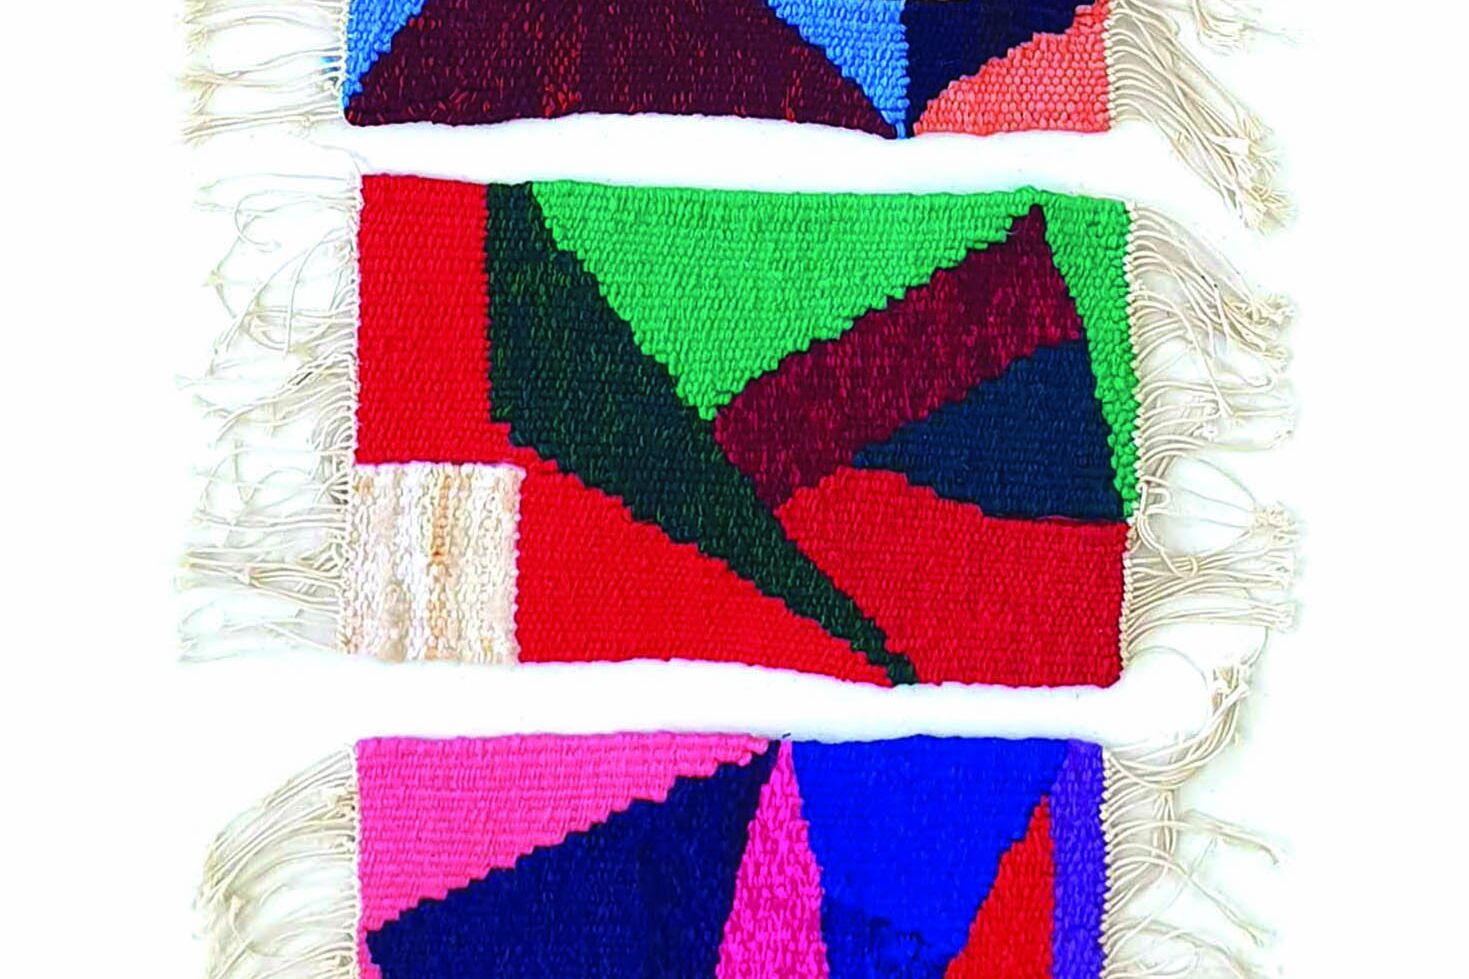 10_OBLIQUE_2023_Billiluna_Tapestry Weaving_dimensions_200cm 300cm  each panel_ALL6_CROP